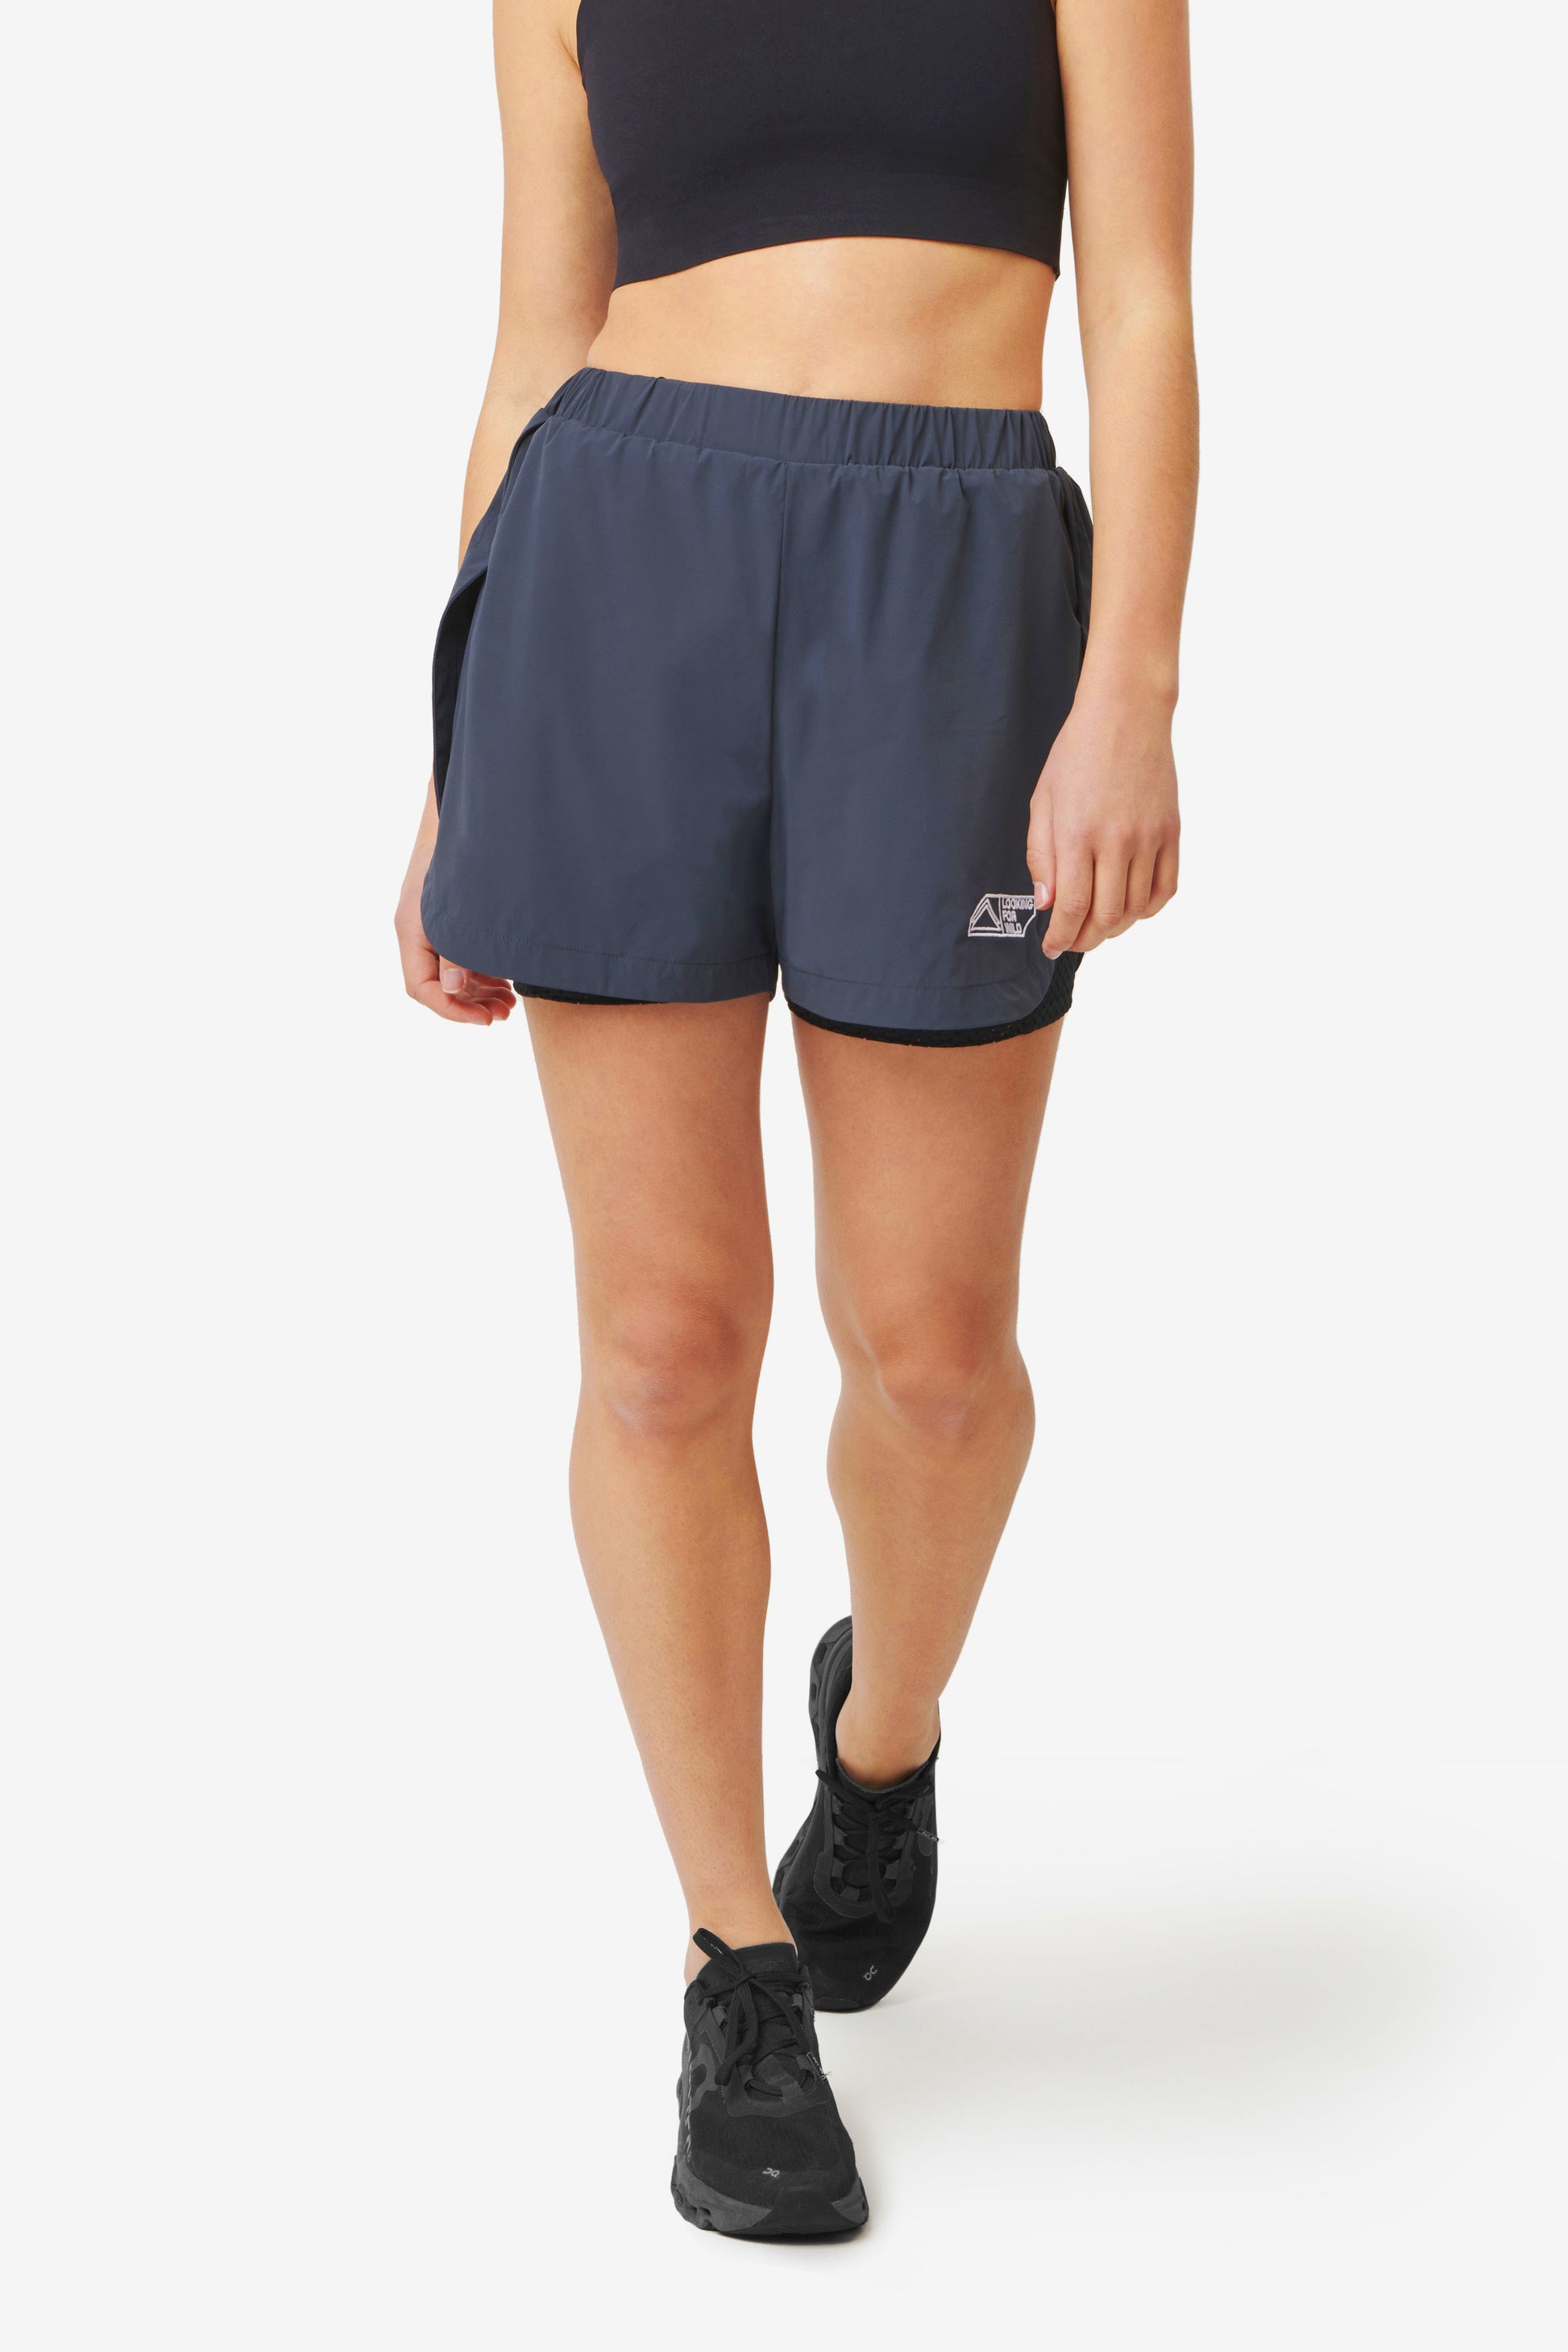 Hava Women's Shorts ANTHRACITE